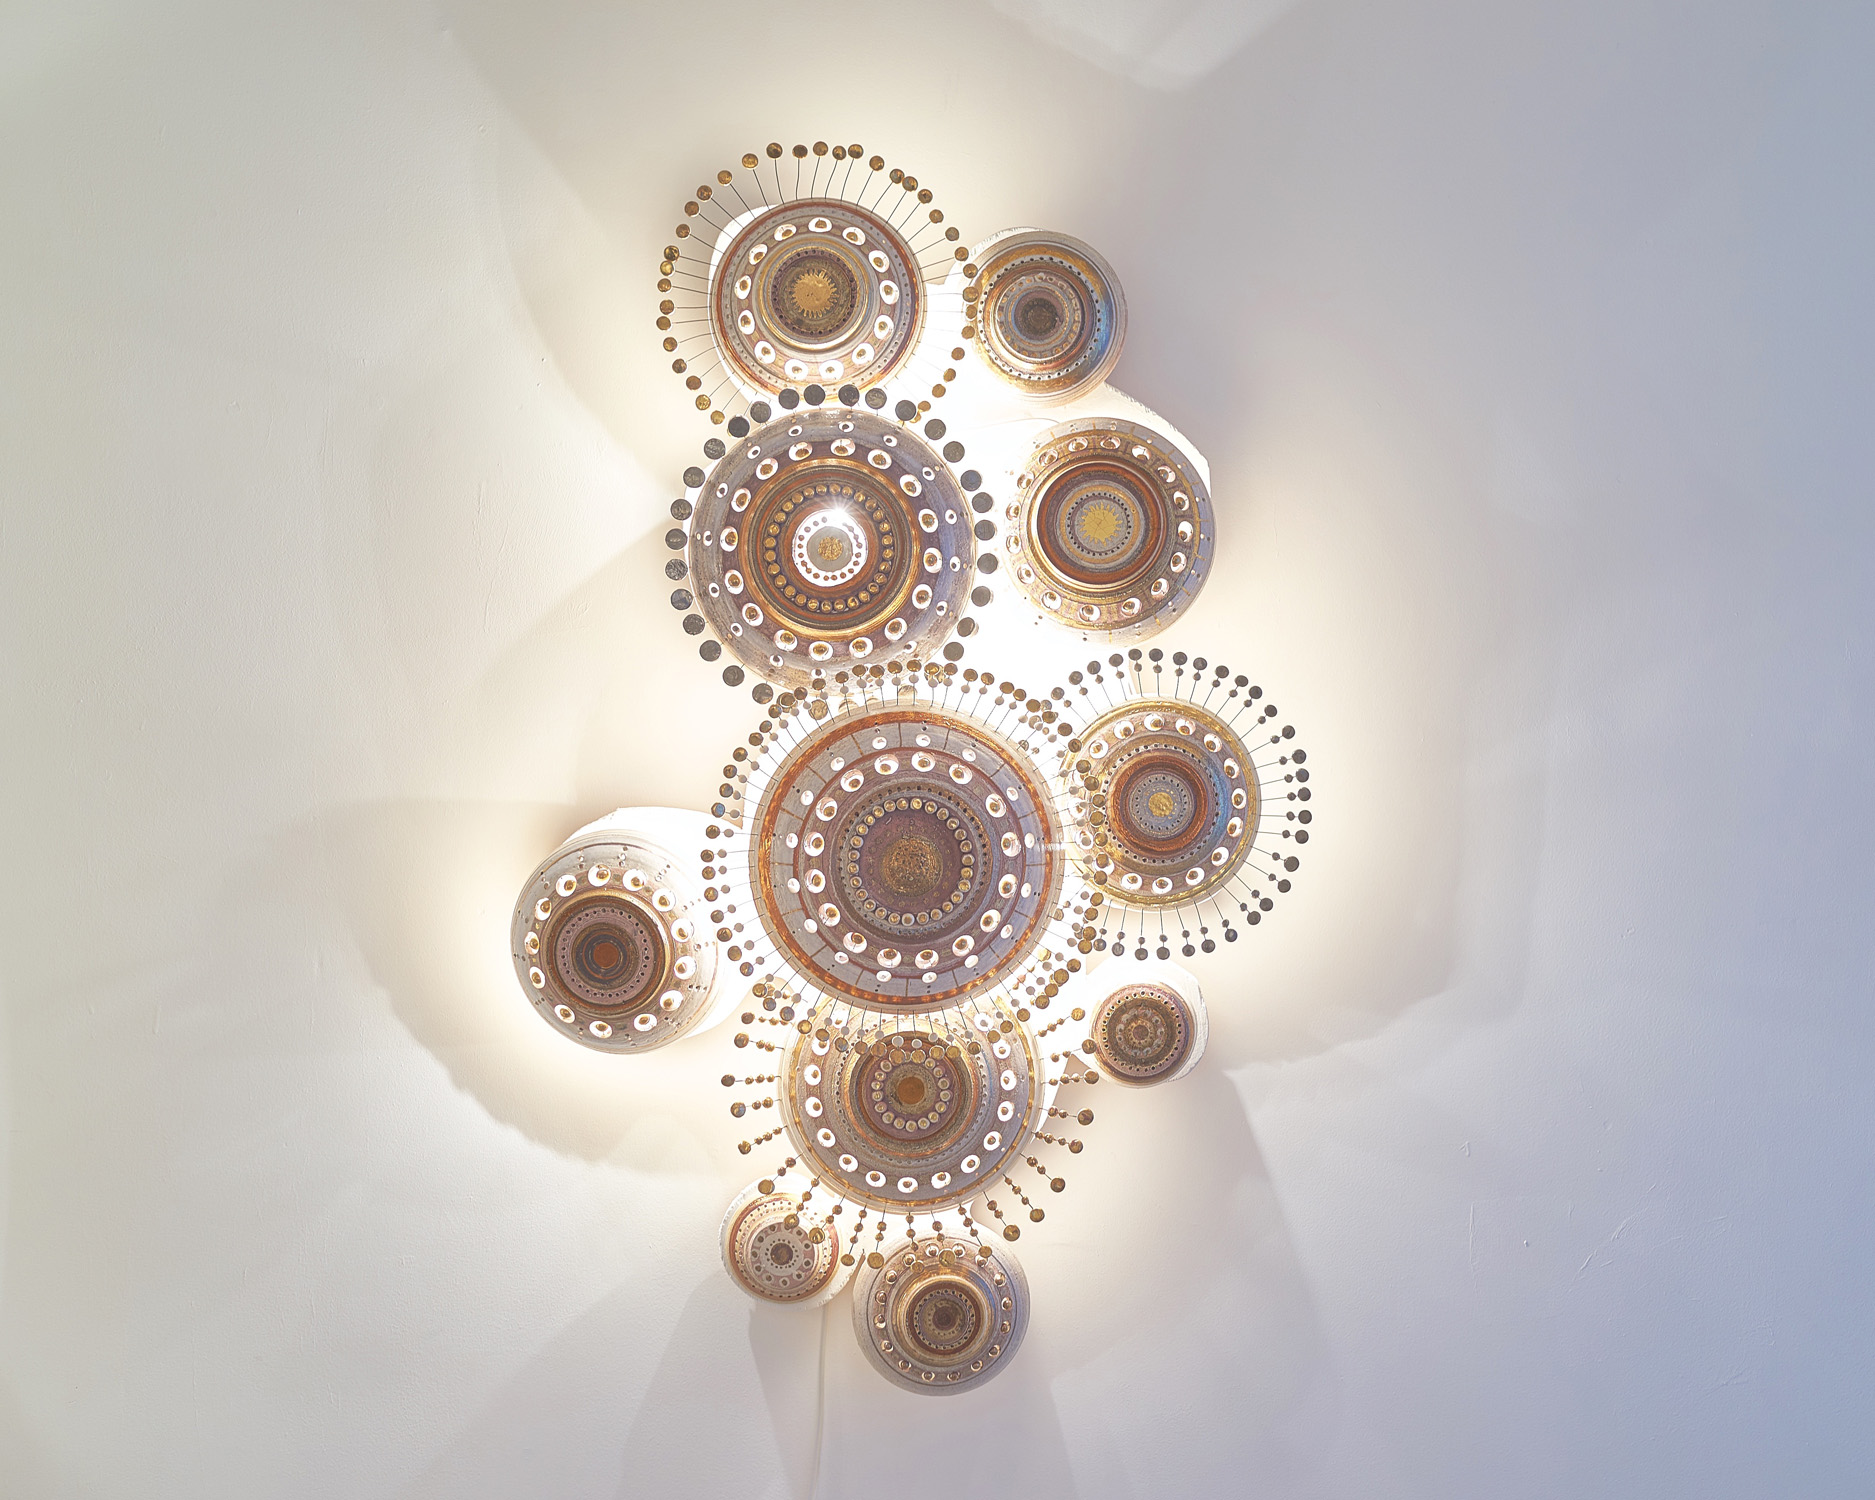 Lights by Galeria Tambien - contemporary interior design and furniture in Ibiza